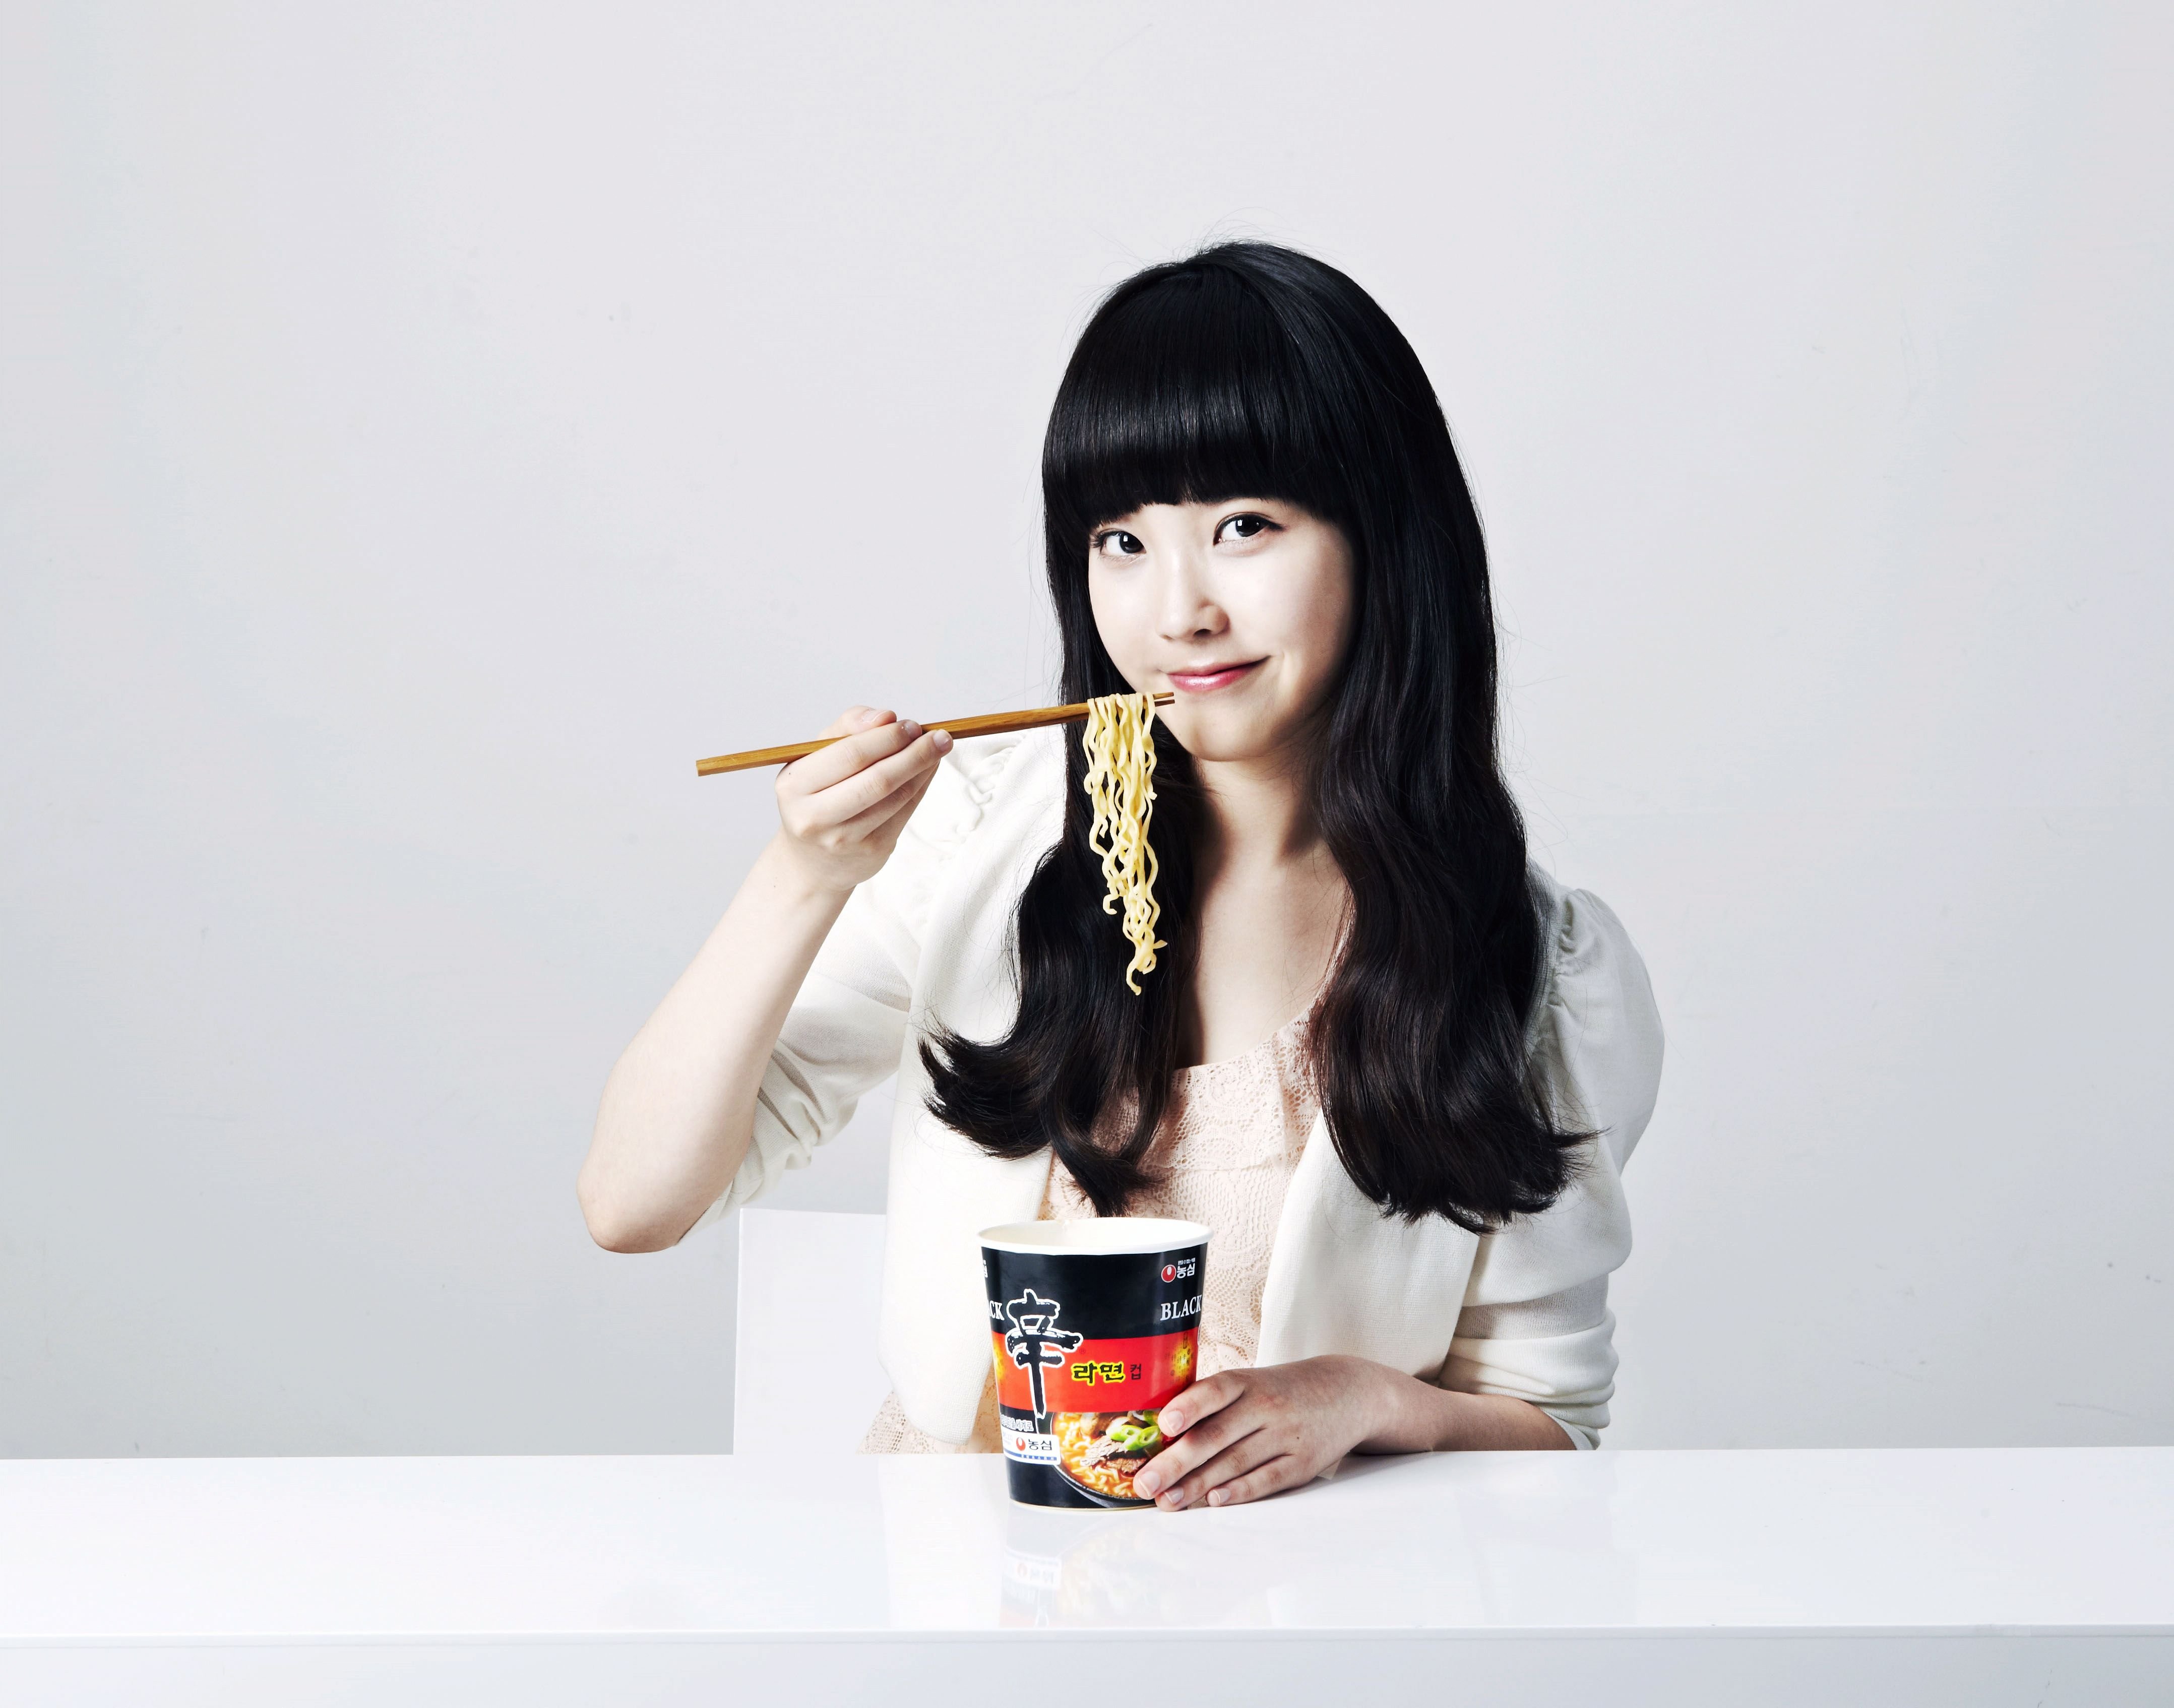 Реклама лапши. IU ест рамен?. Кореянка с едой. Девушка ест. Красивые девушки кореянки.